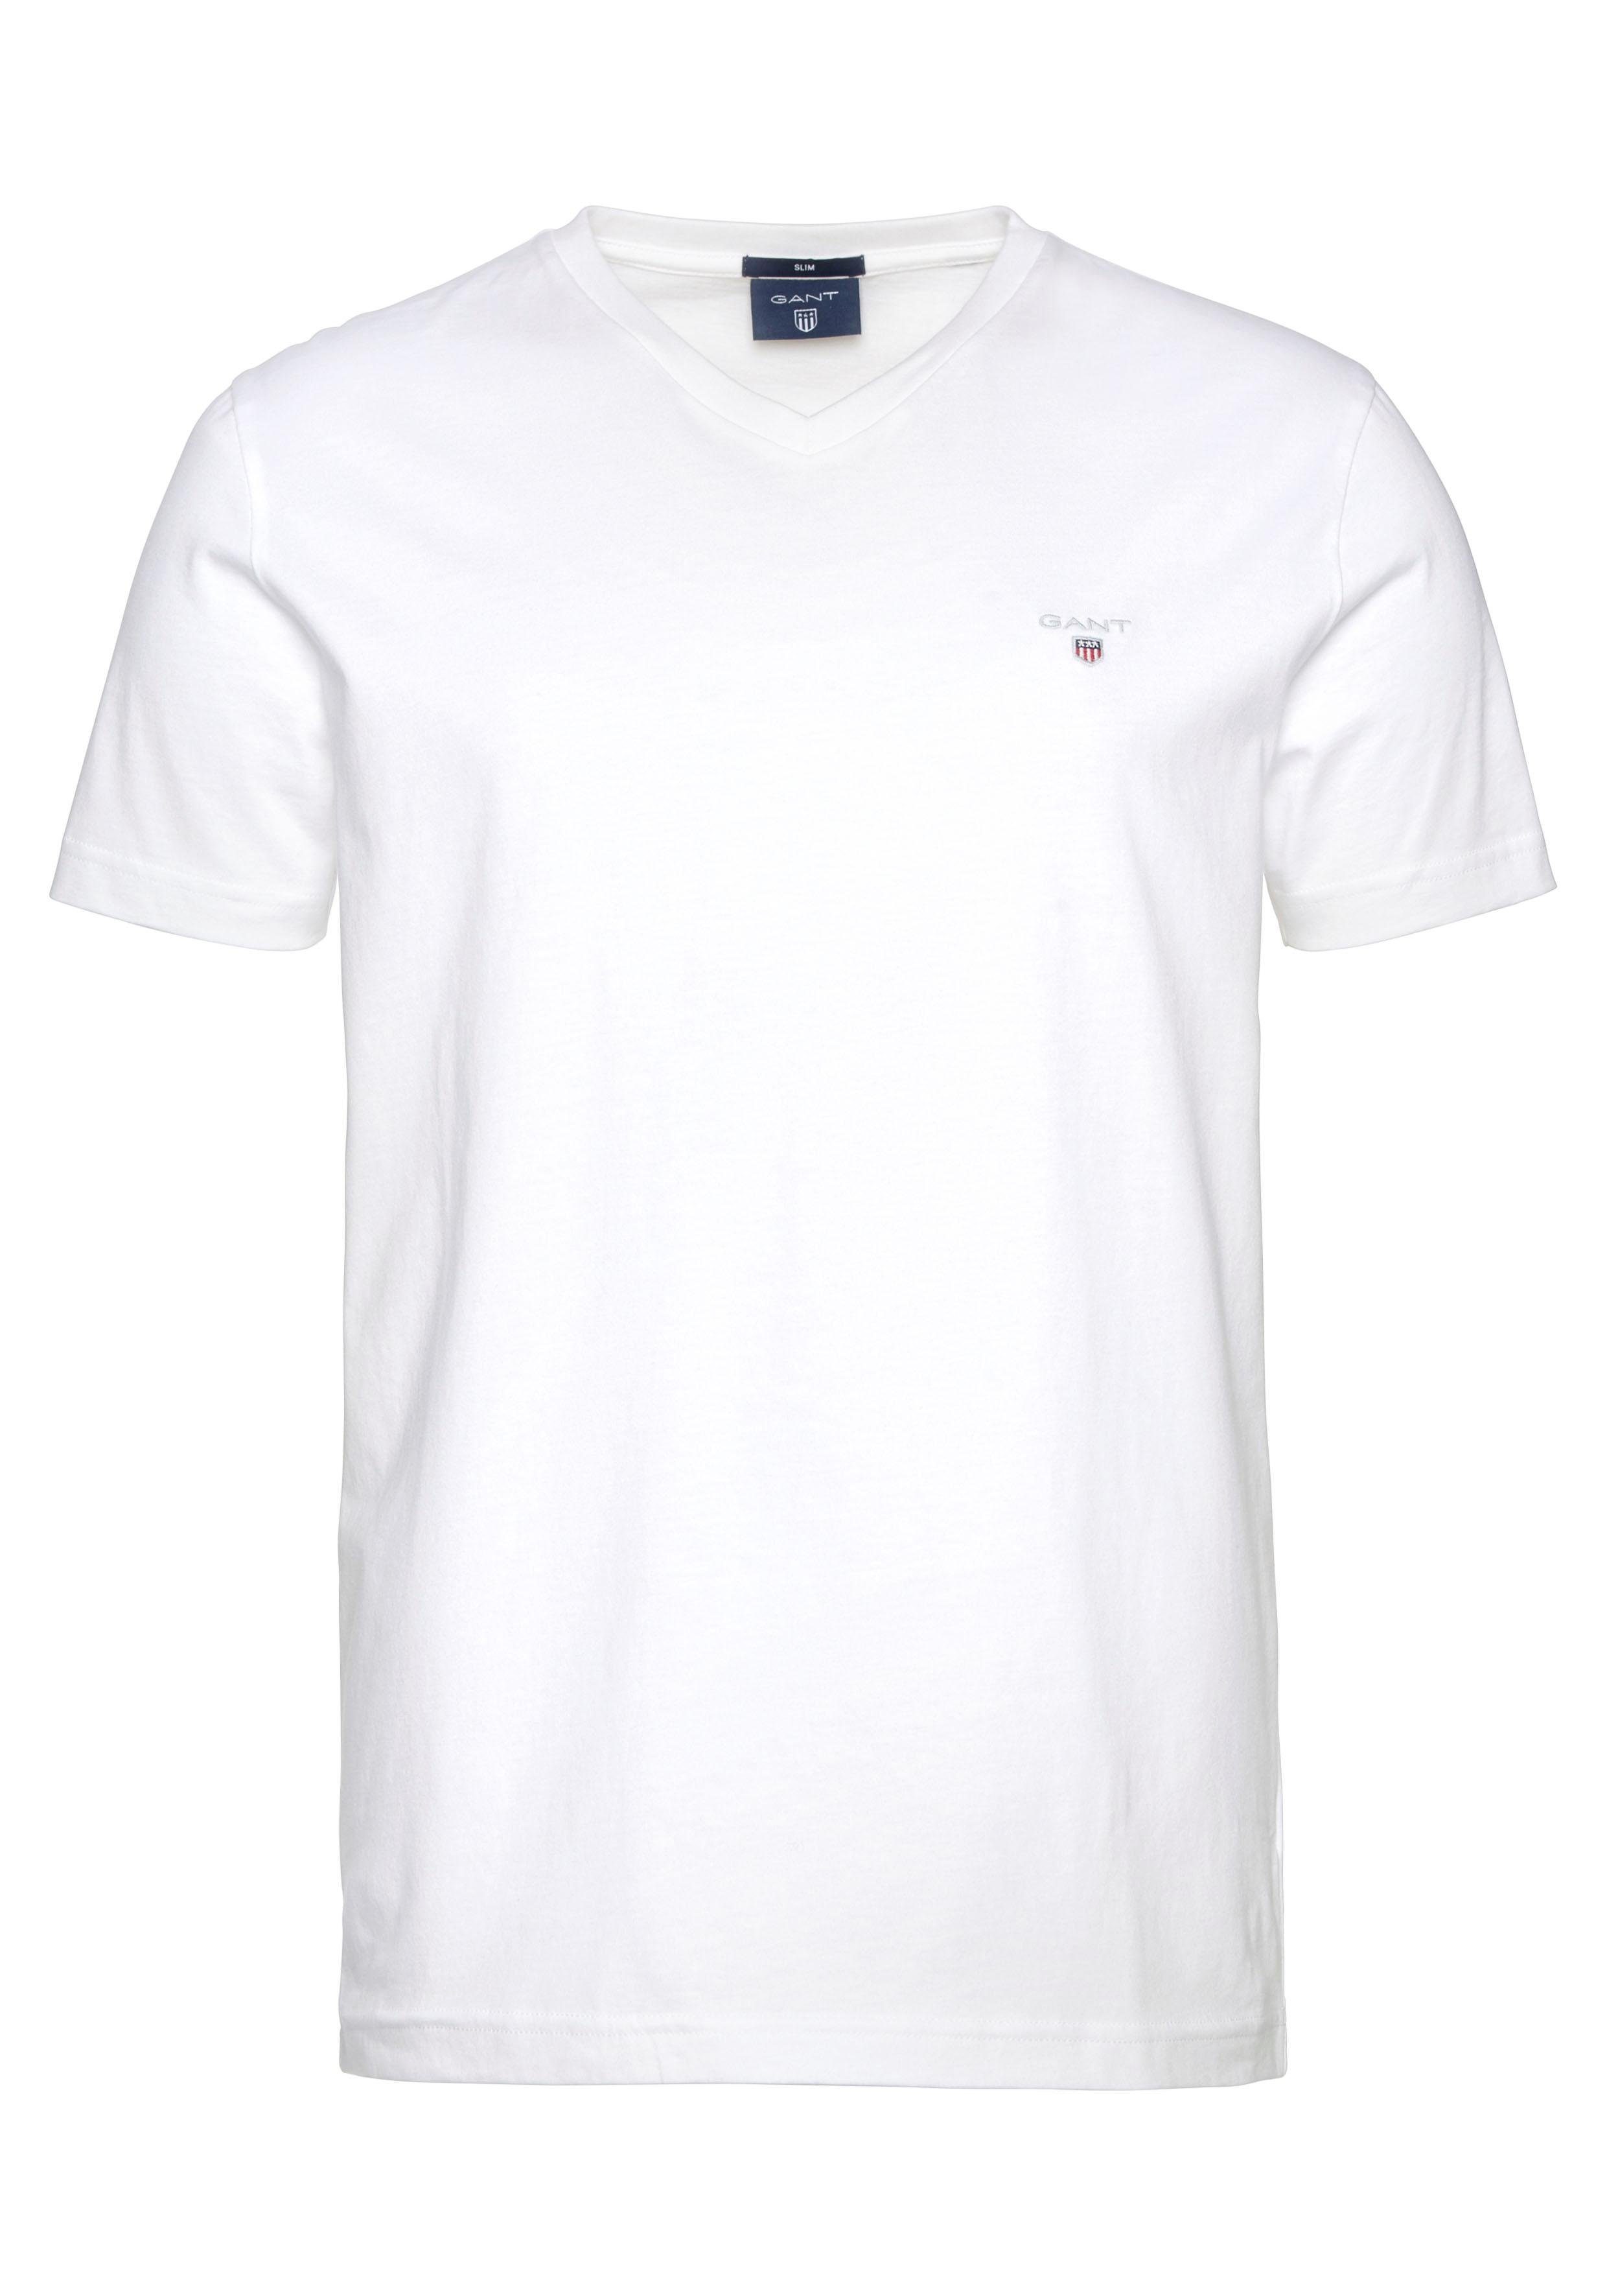 Blende white V-Shirt mit Gant